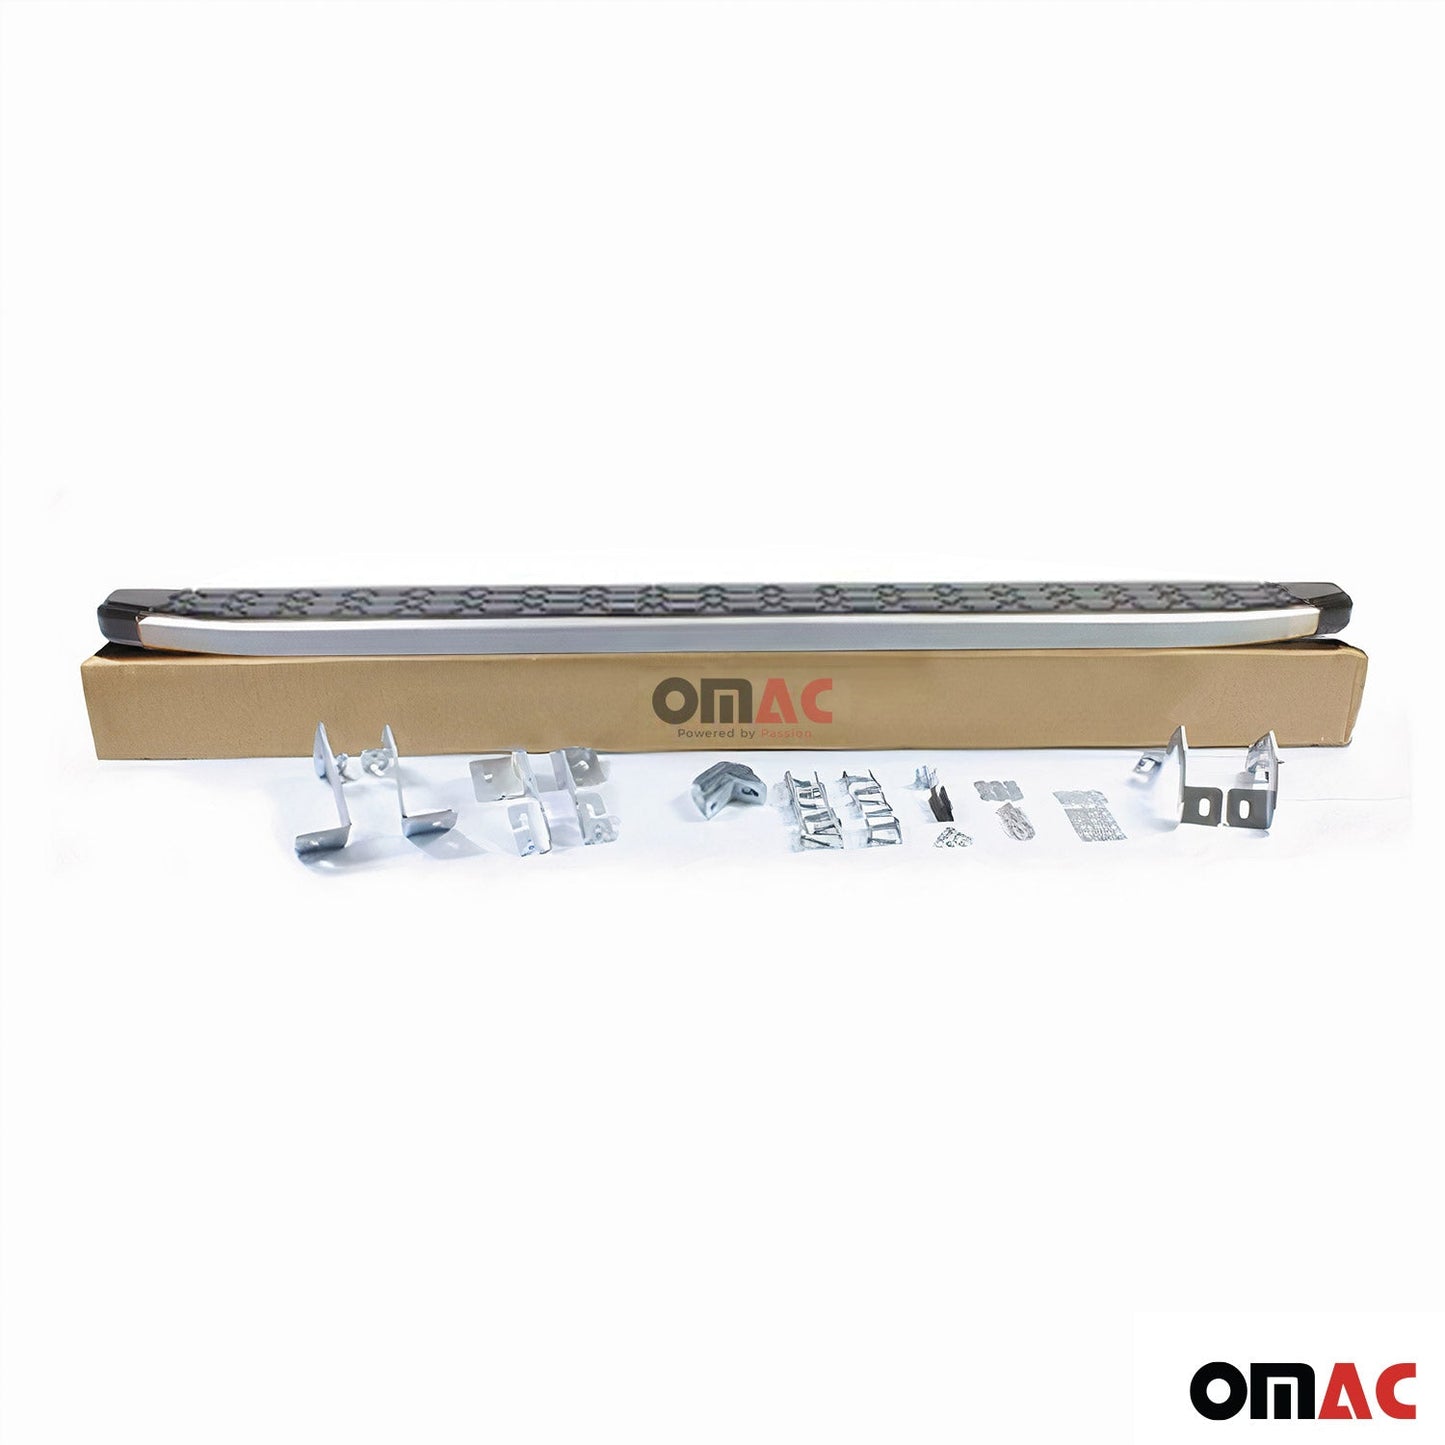 OMAC Running Board Side Steps Nerf Bar for Fiat 500L 2014-2020 Black Silver 2Pcs 2529984A